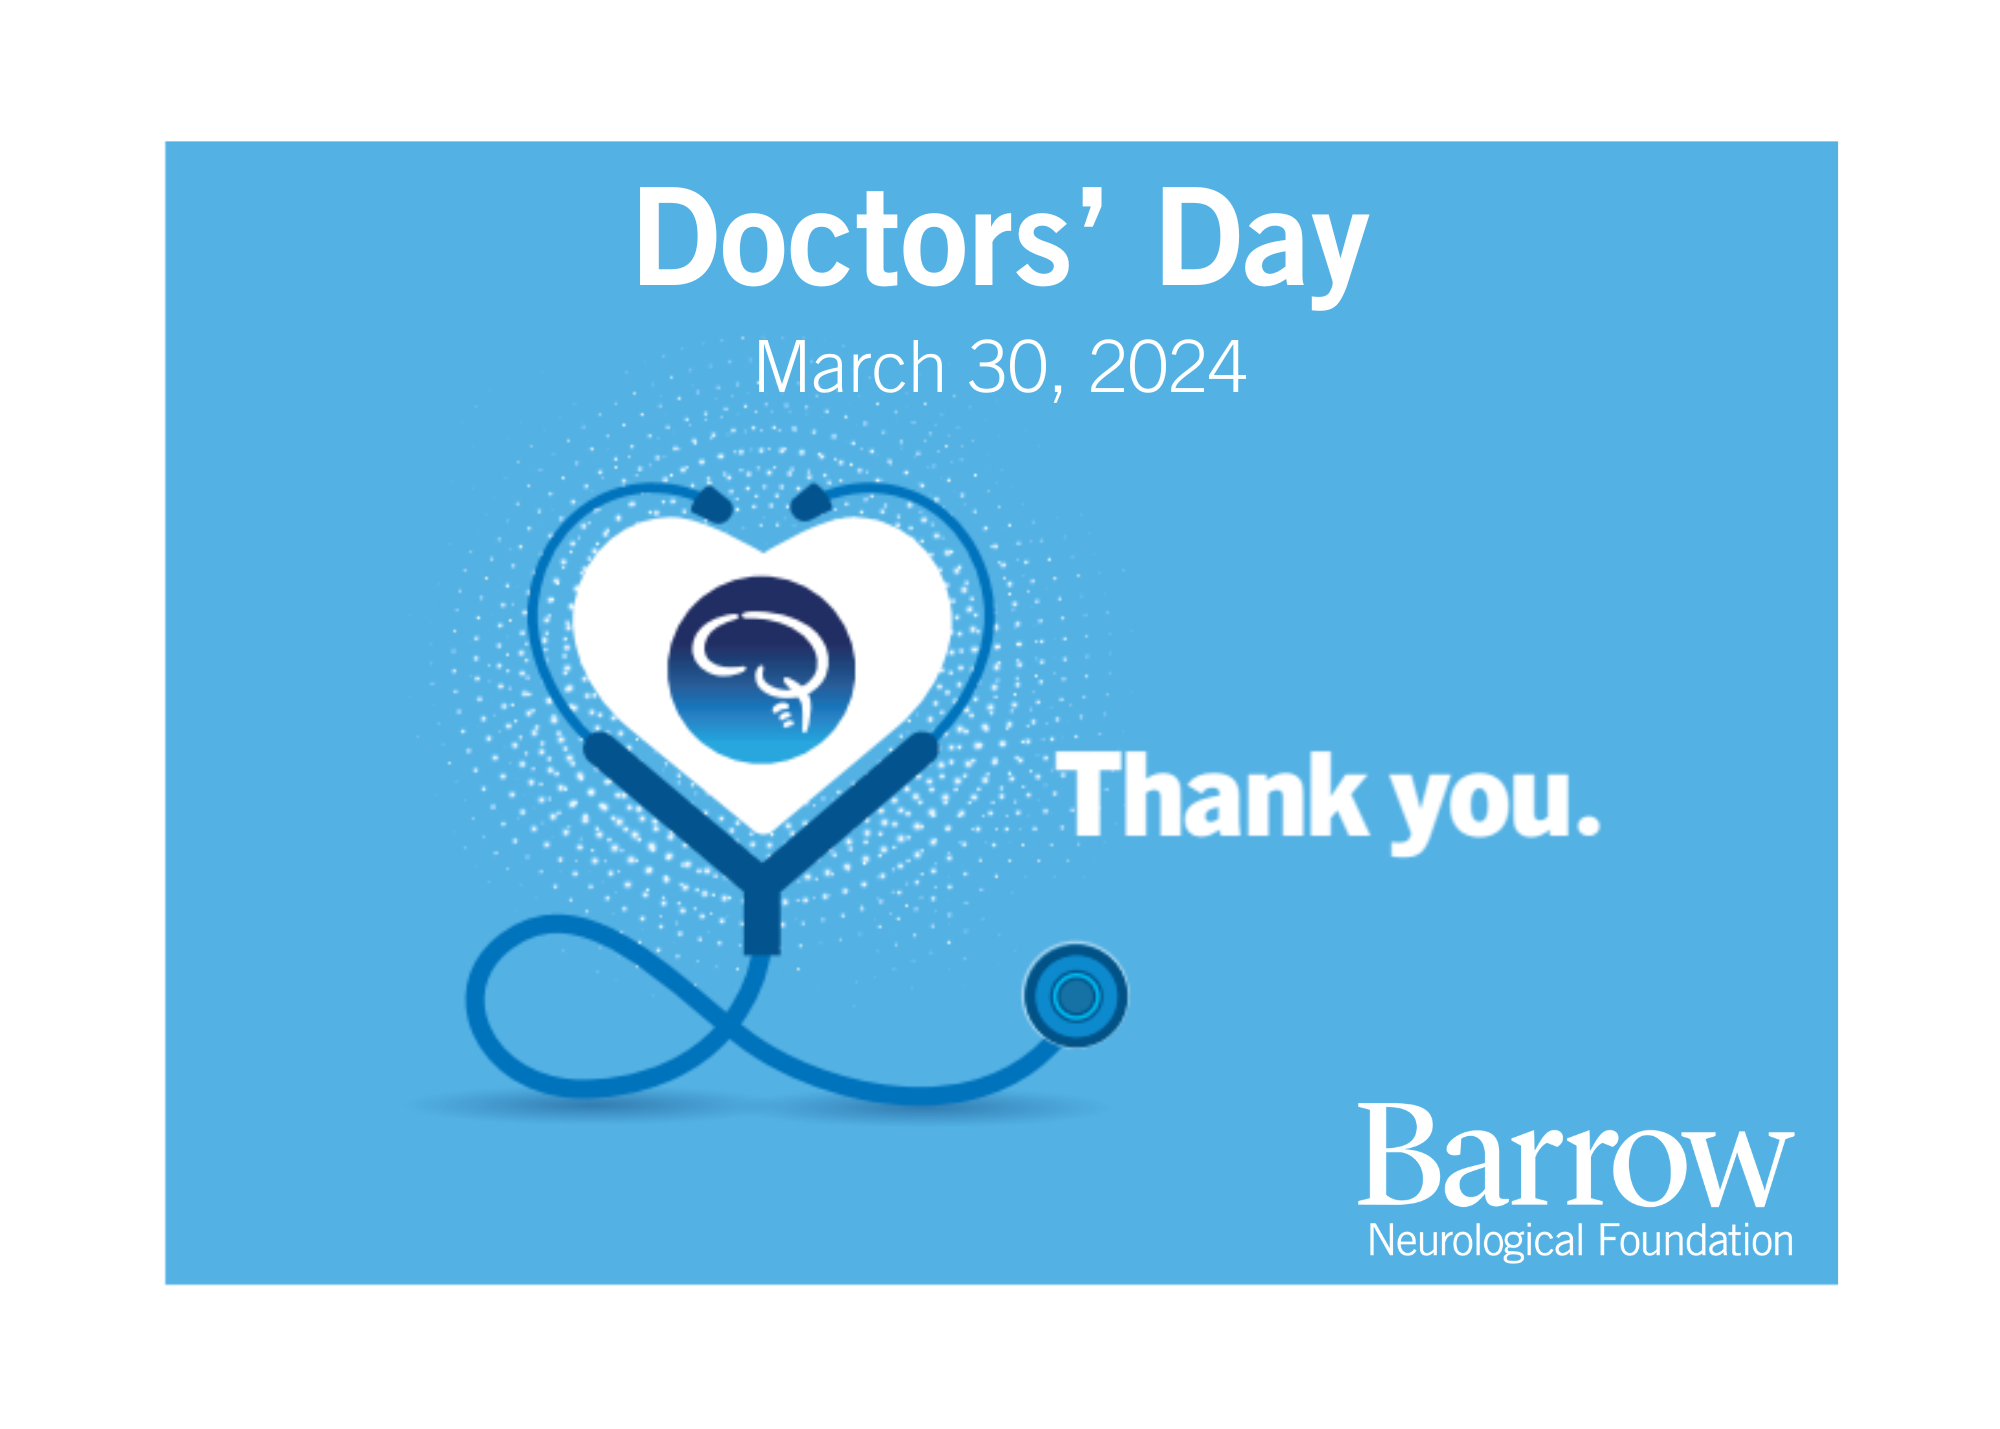 Doctors Day Logo